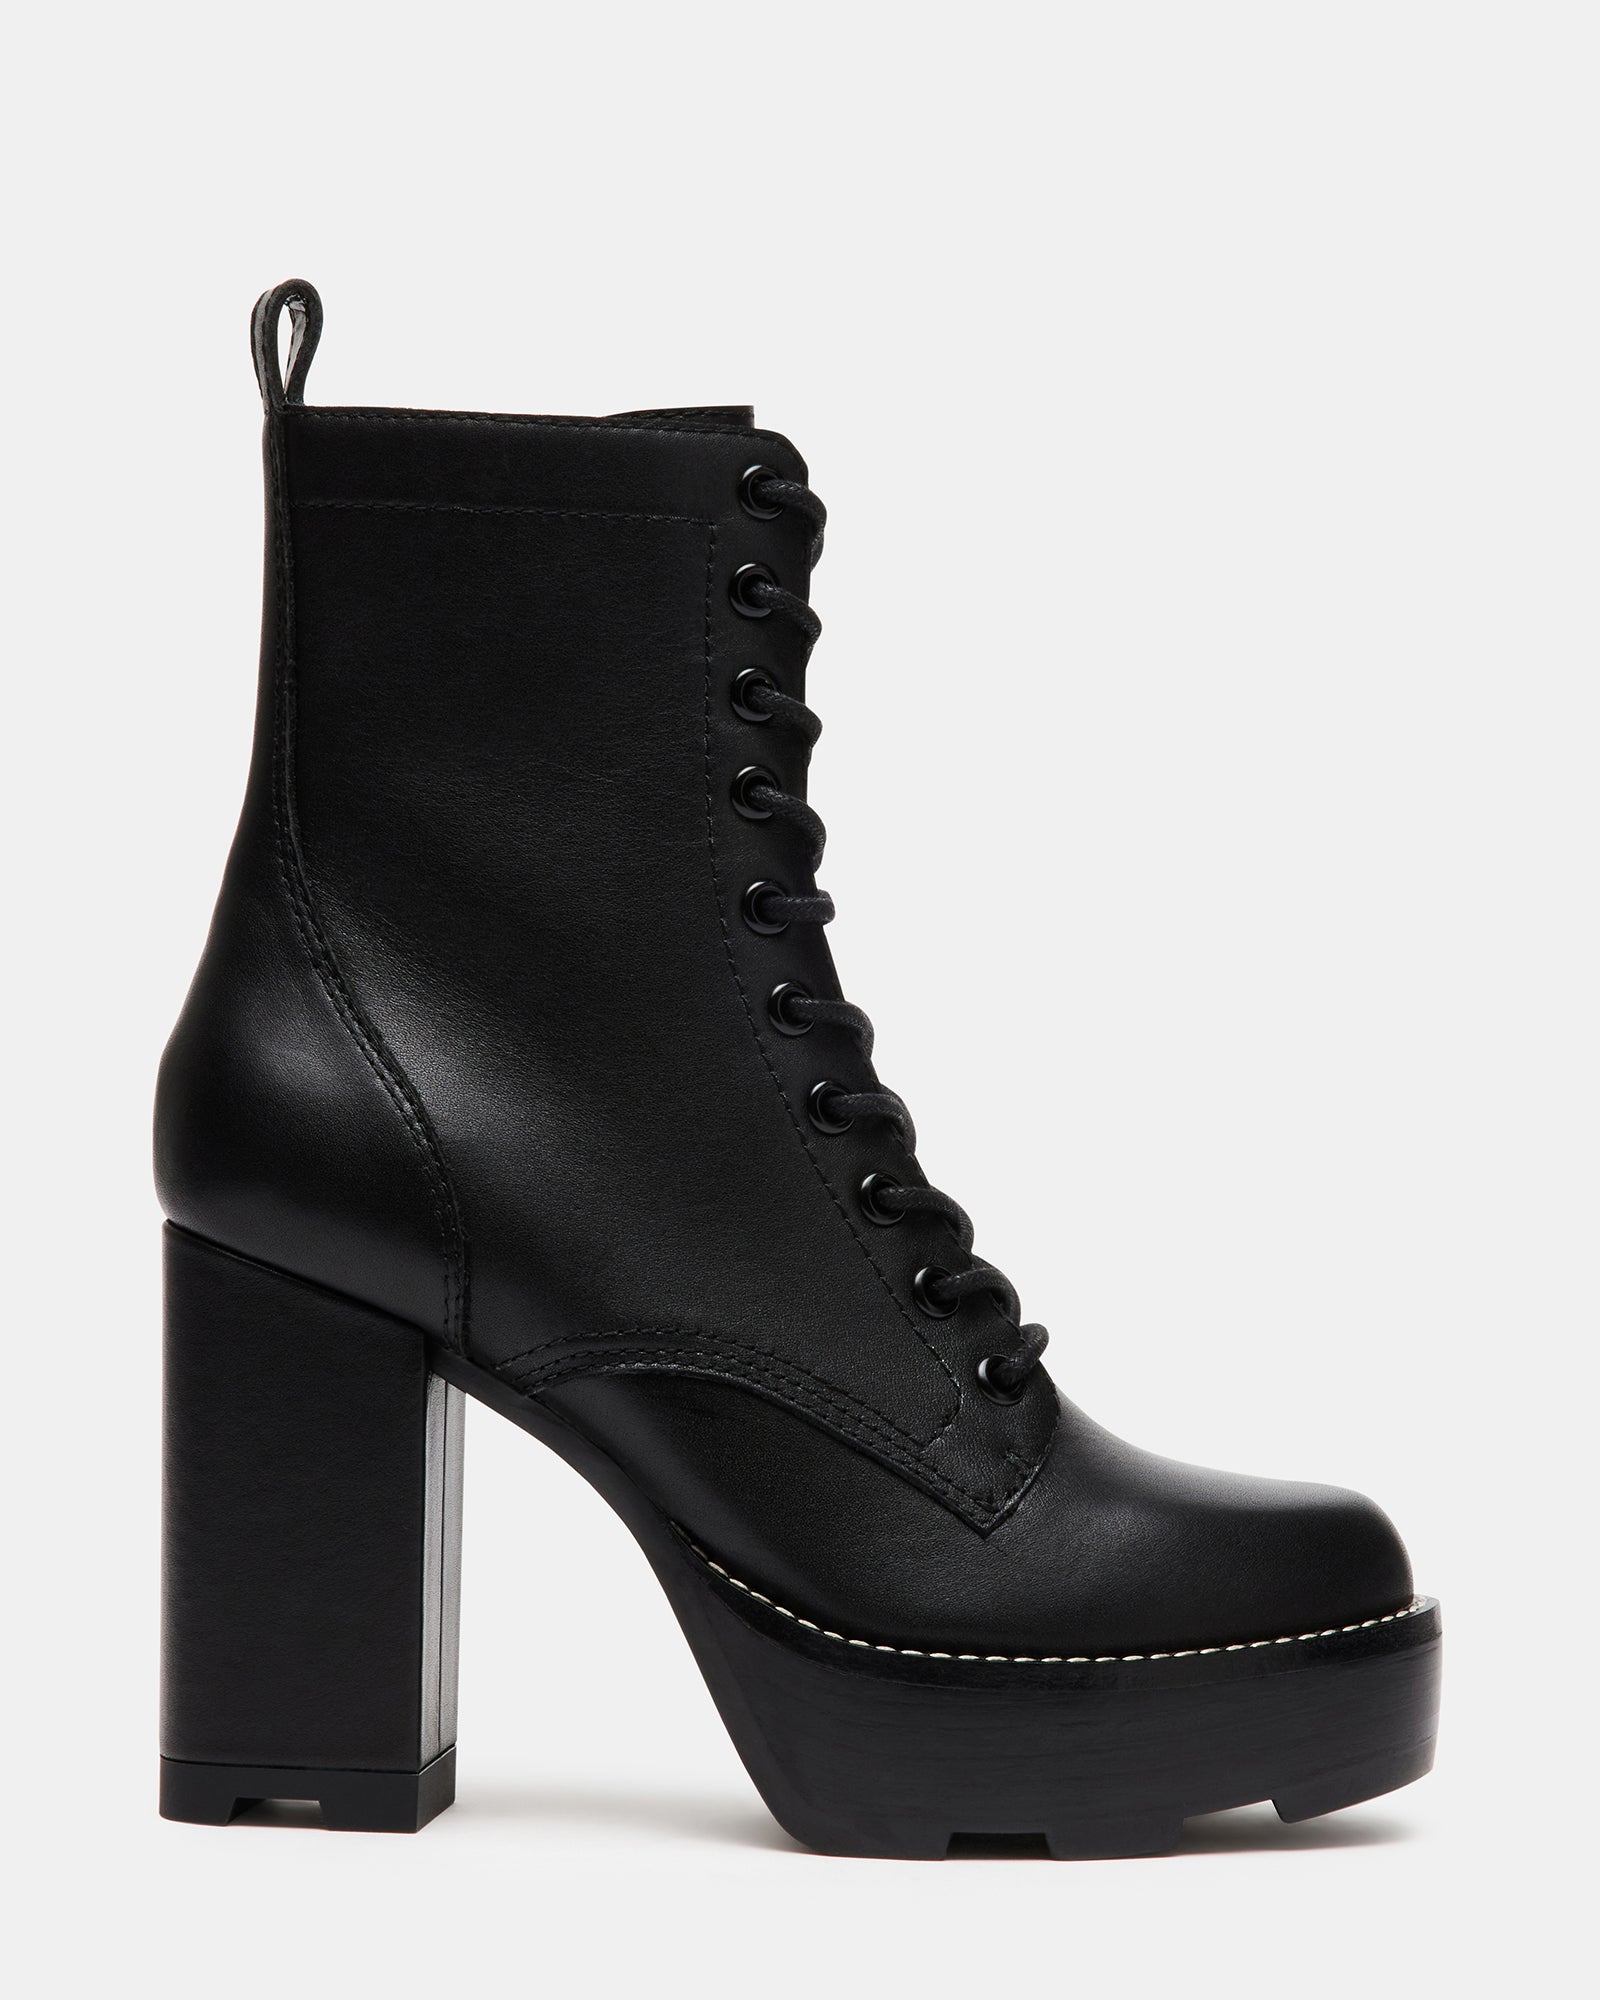 ALORA Black Leather Platform Ankle Bootie | Women's Booties